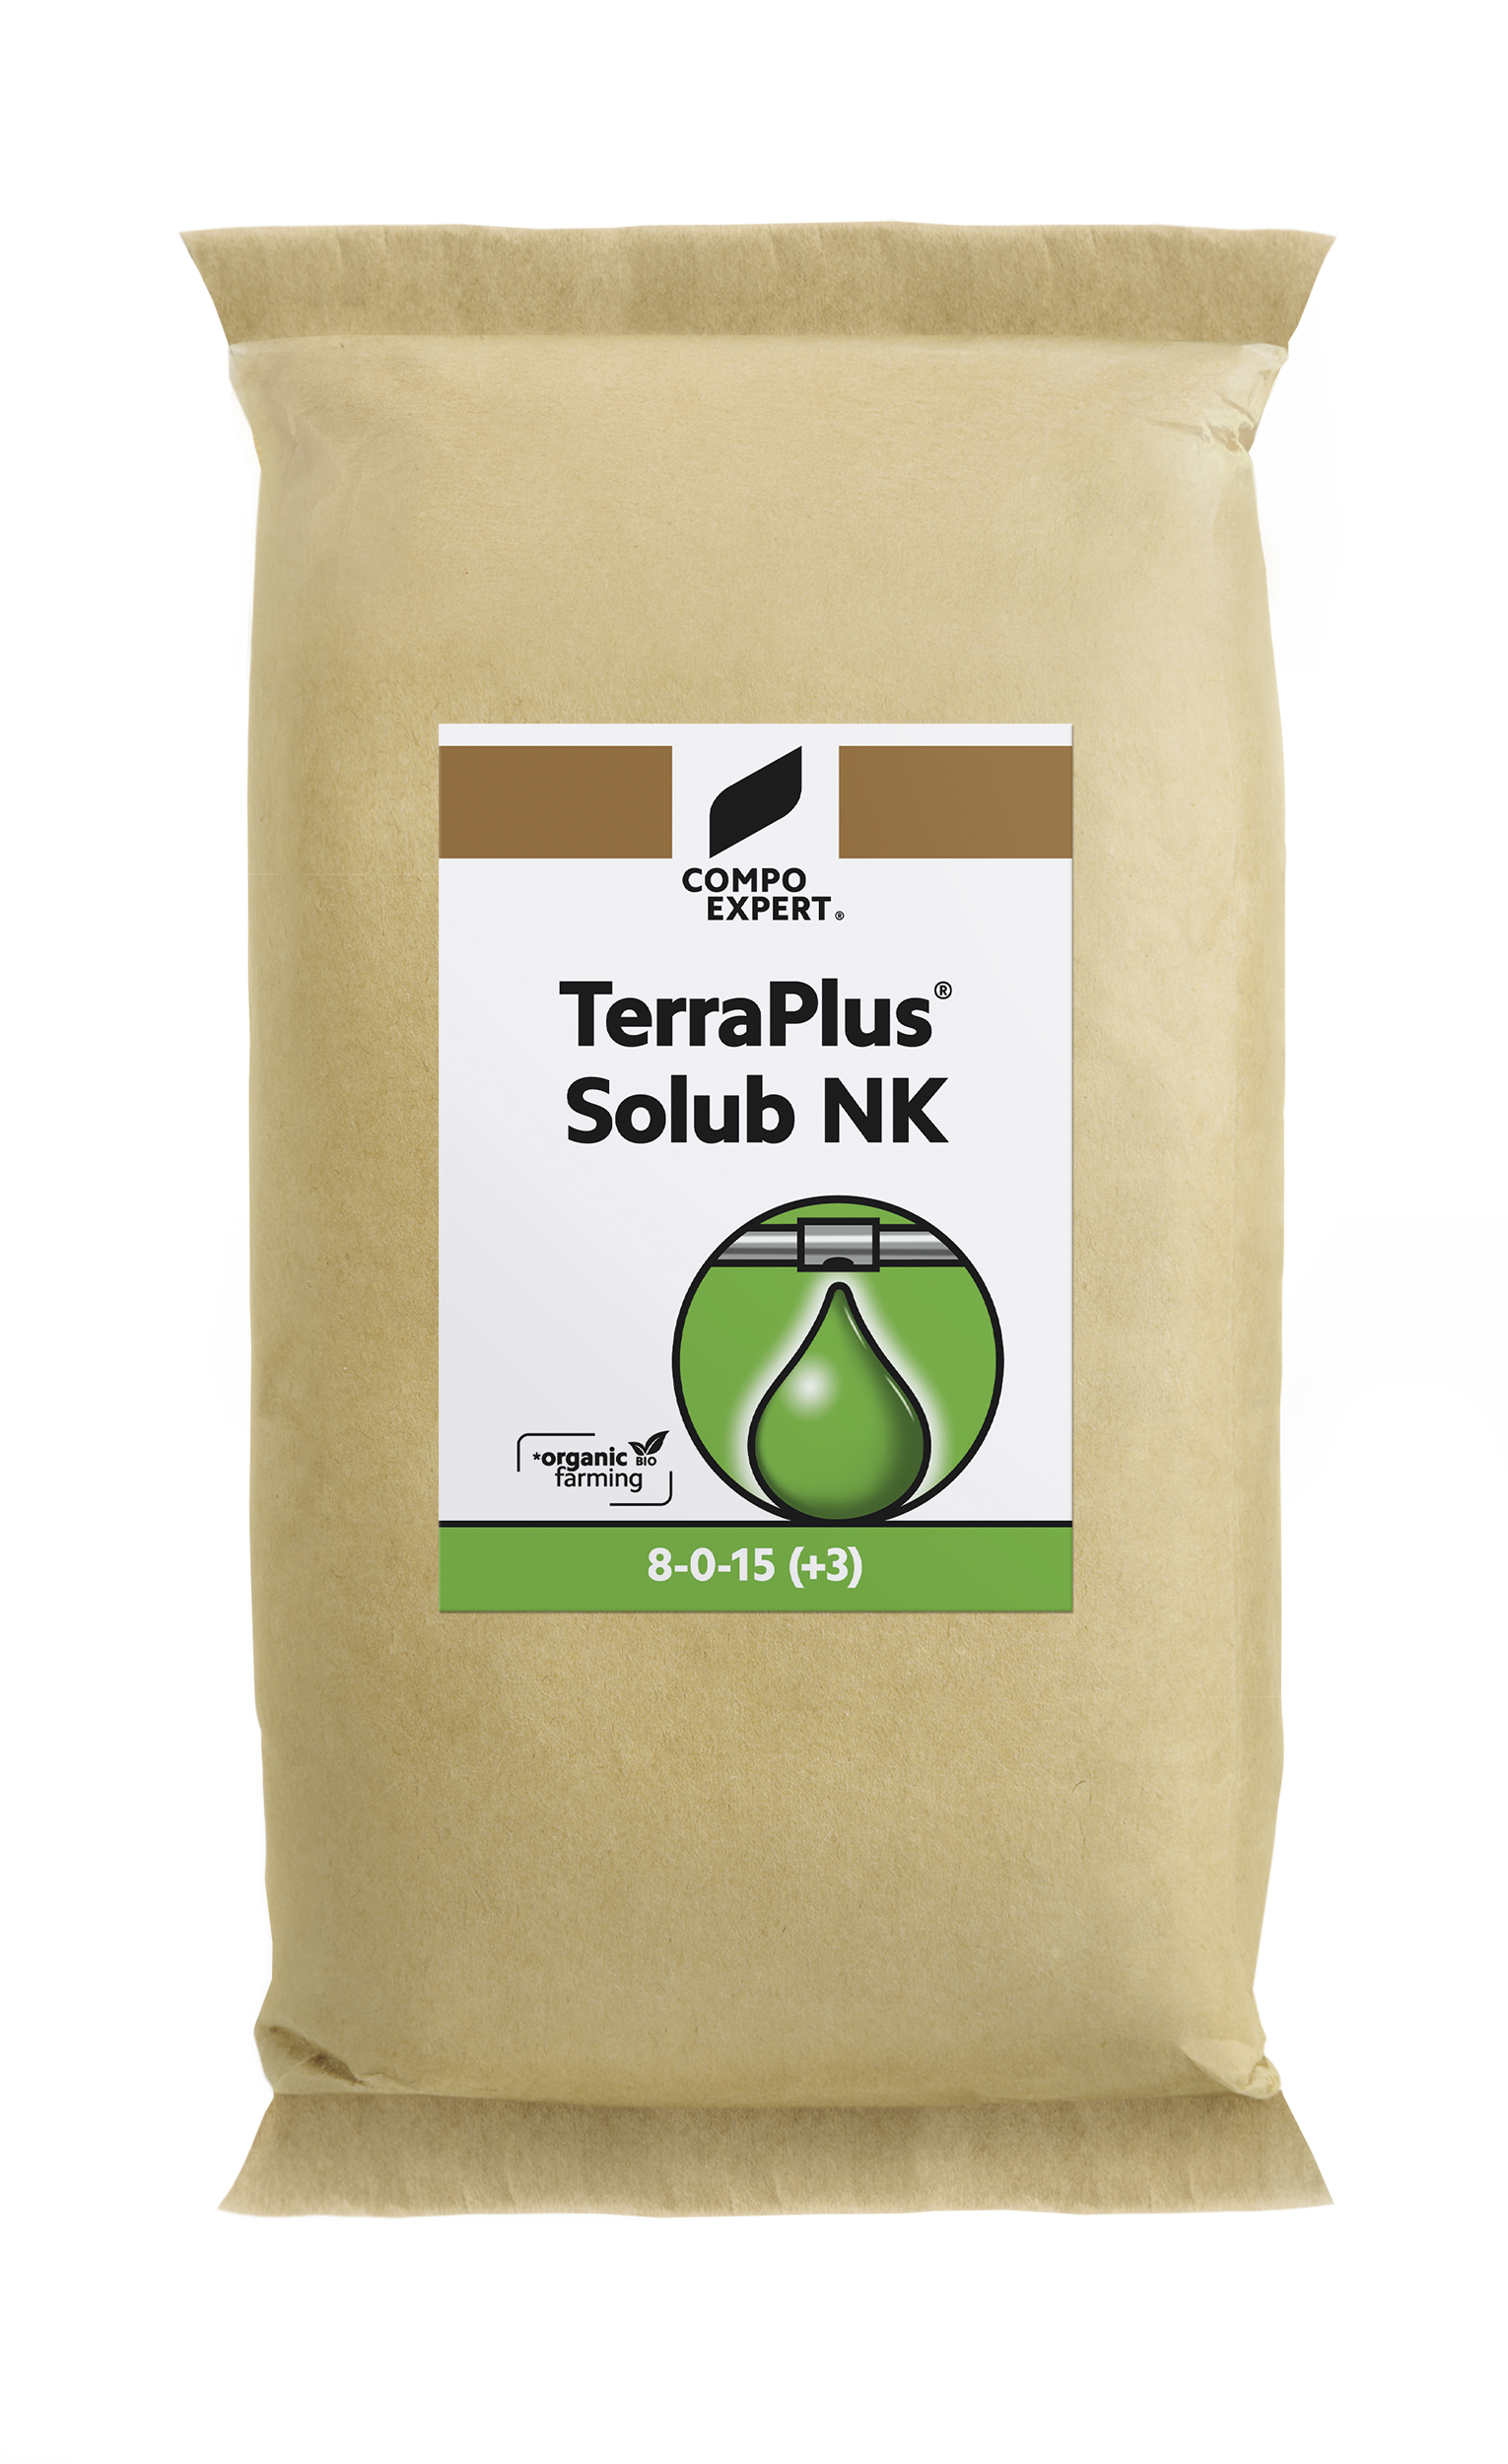 Compo-Expert TerraPlus Solub NK per KG (soluble fertiliser)